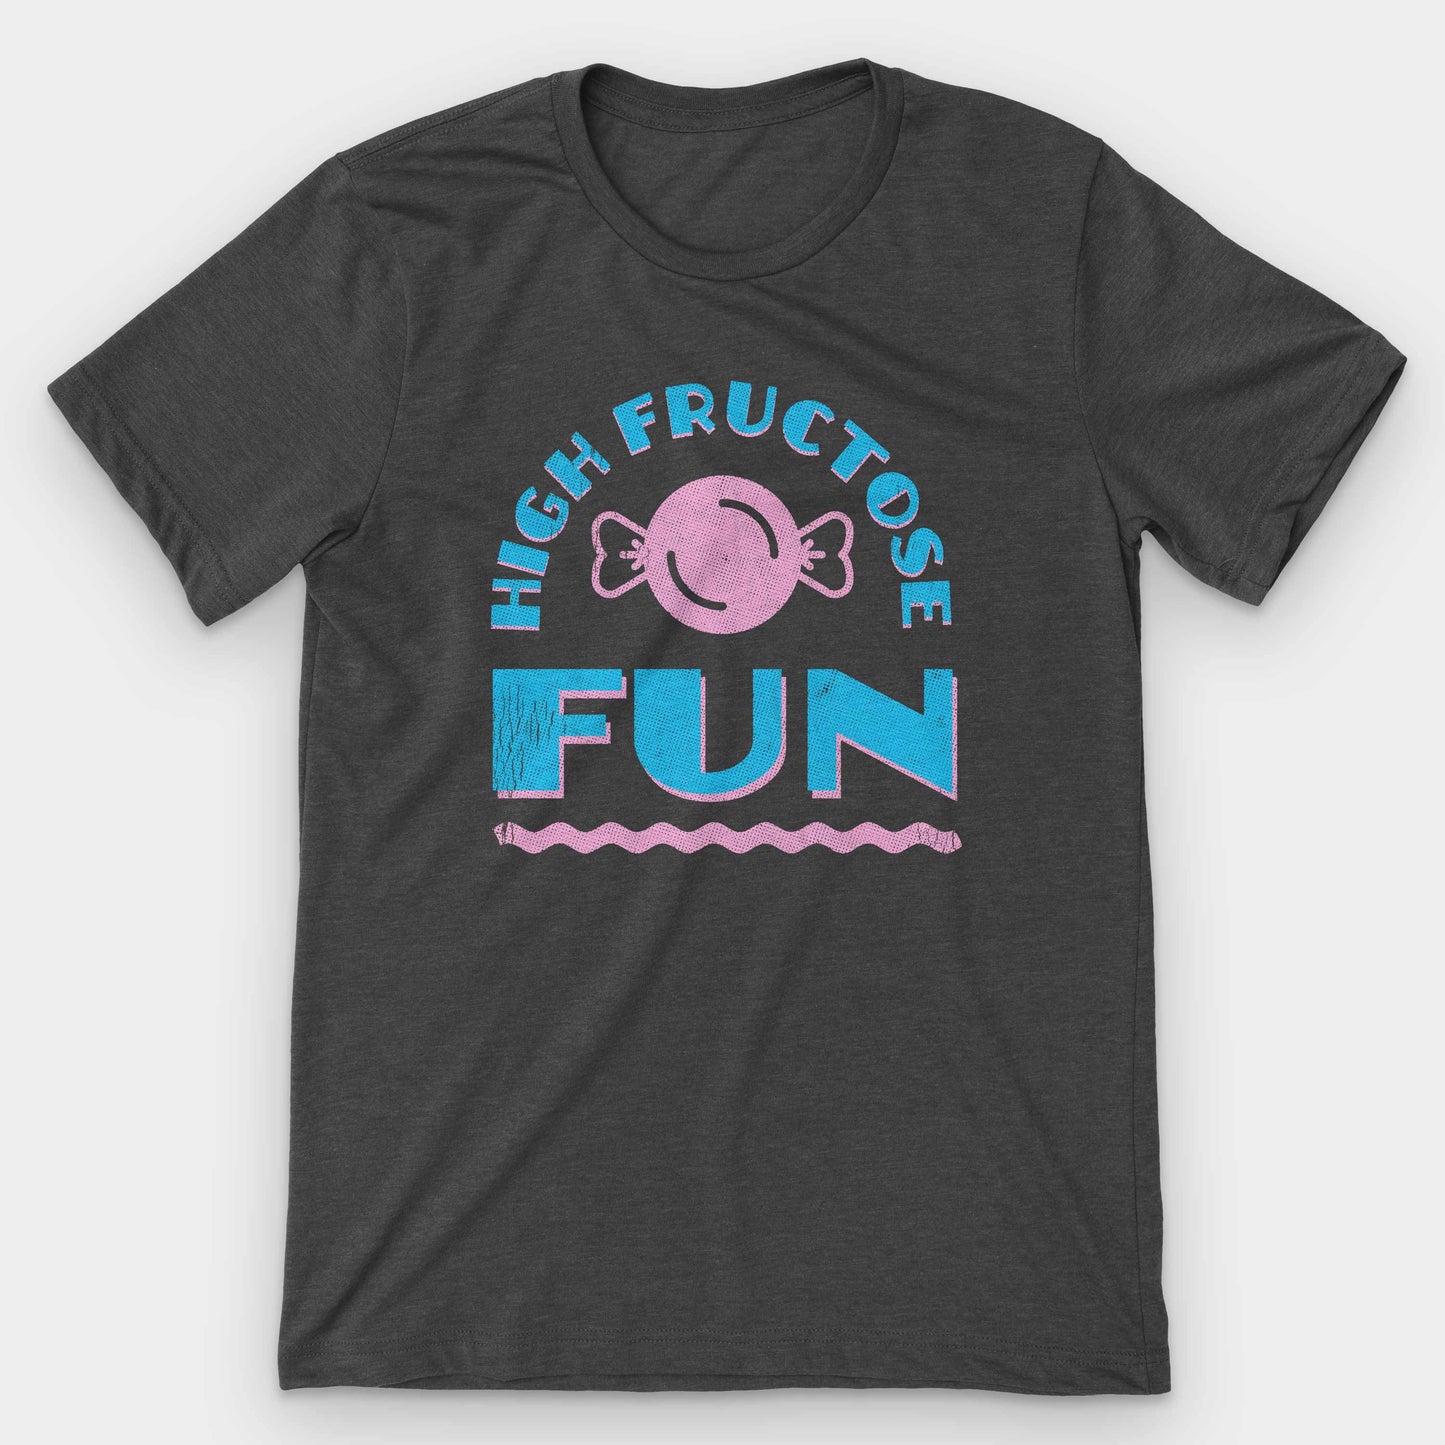 Dark Grey Heather High Fructose Fun Graphic T-Shirt by Snaxtime